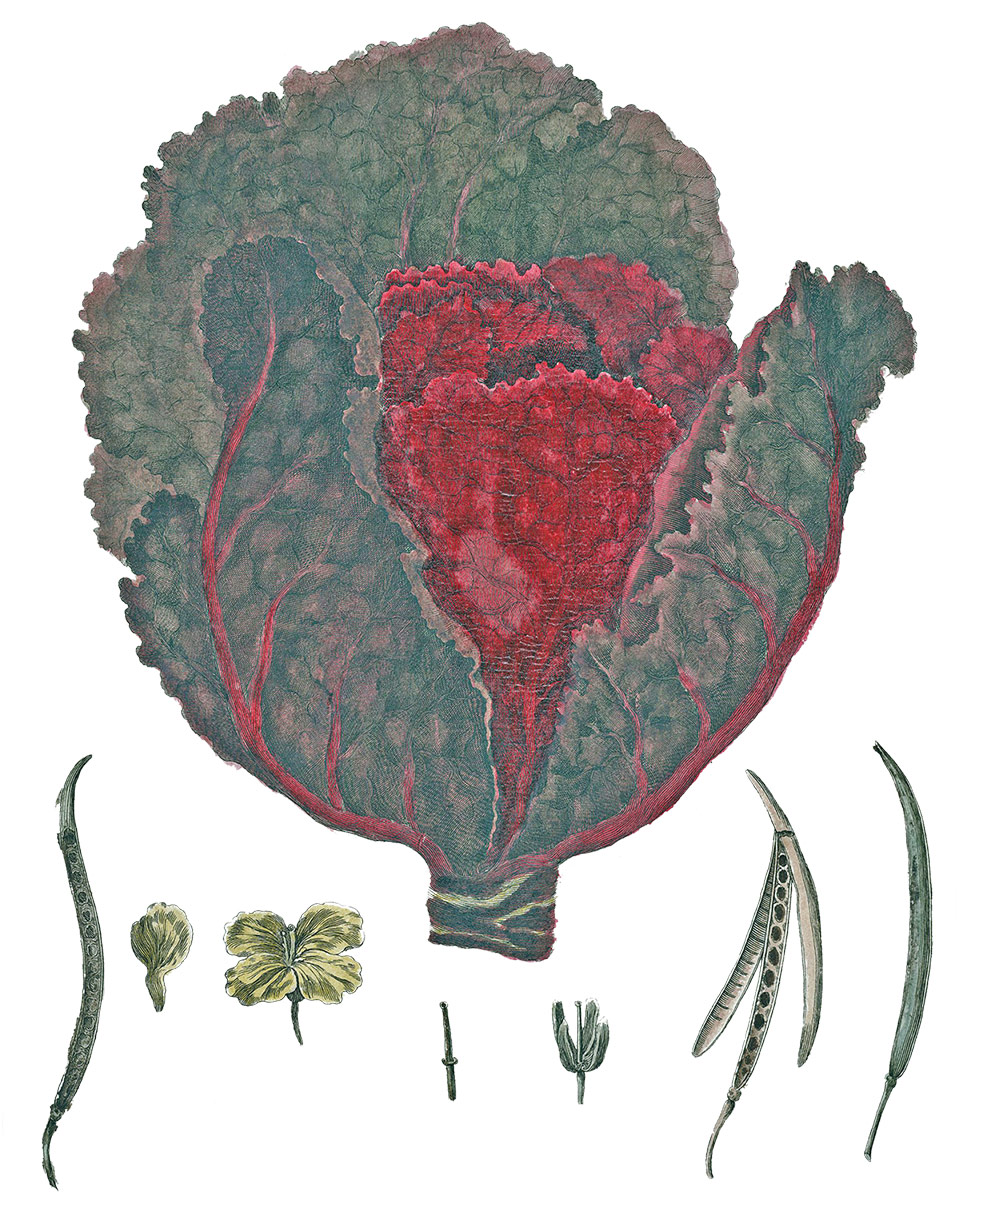 Brassica oleracea acephala